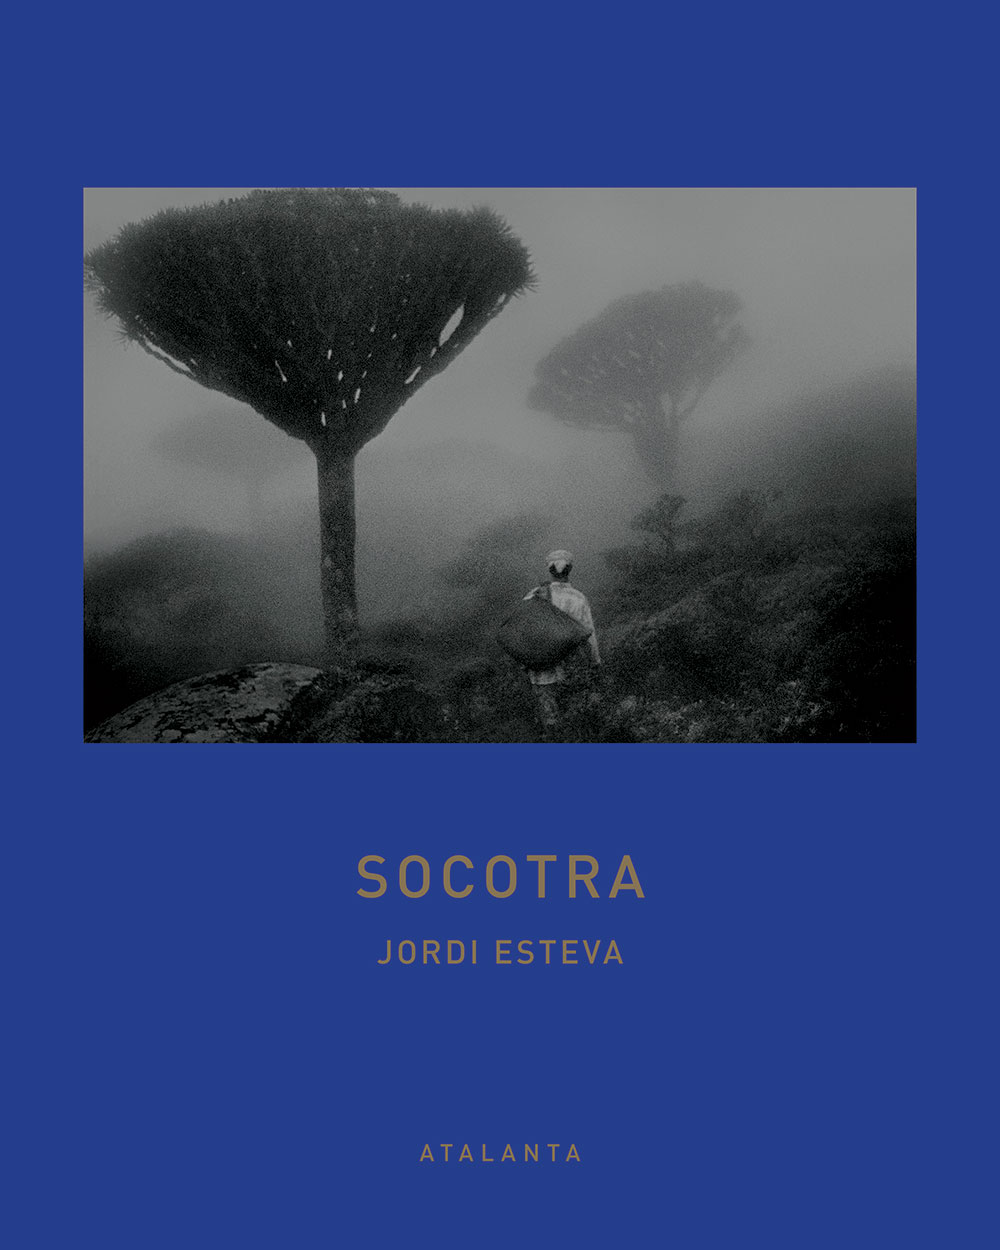 Socotra, photo book